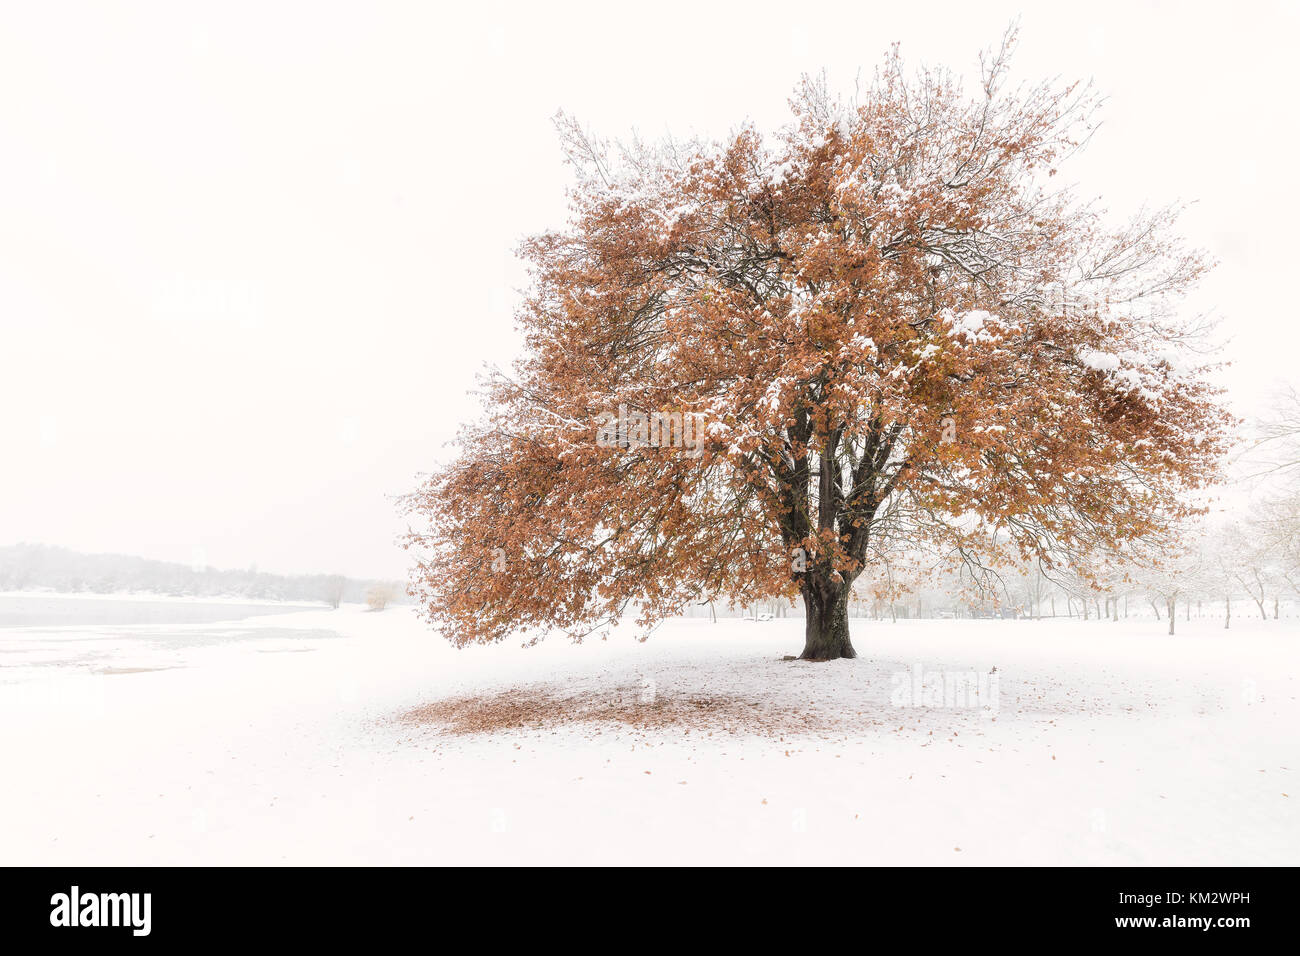 Snowed oak with yellow leaves in Landa, Alava Stock Photo